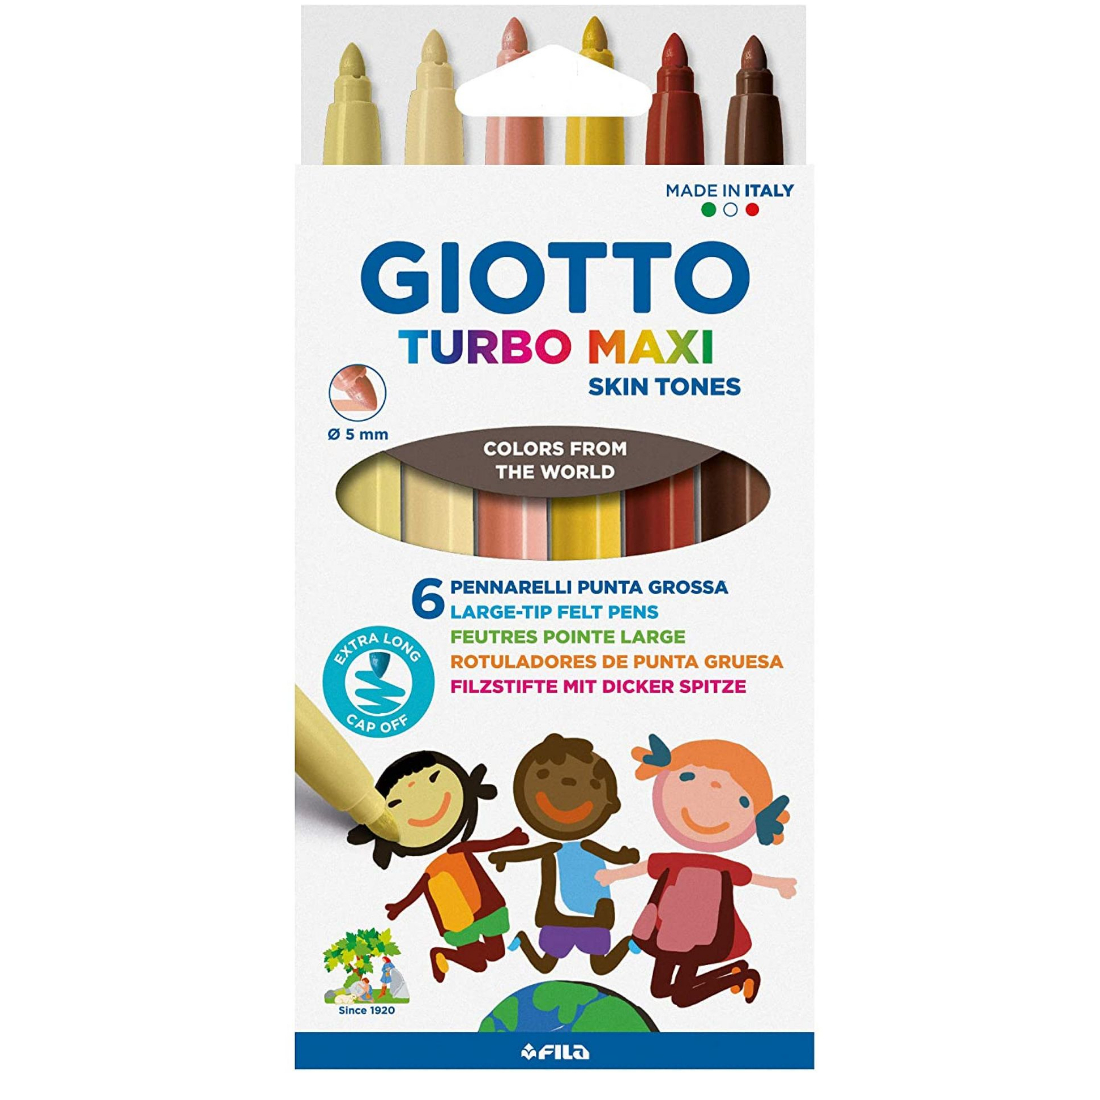 Marcadores Turbo Maxi Tons de Pele Giotto fila